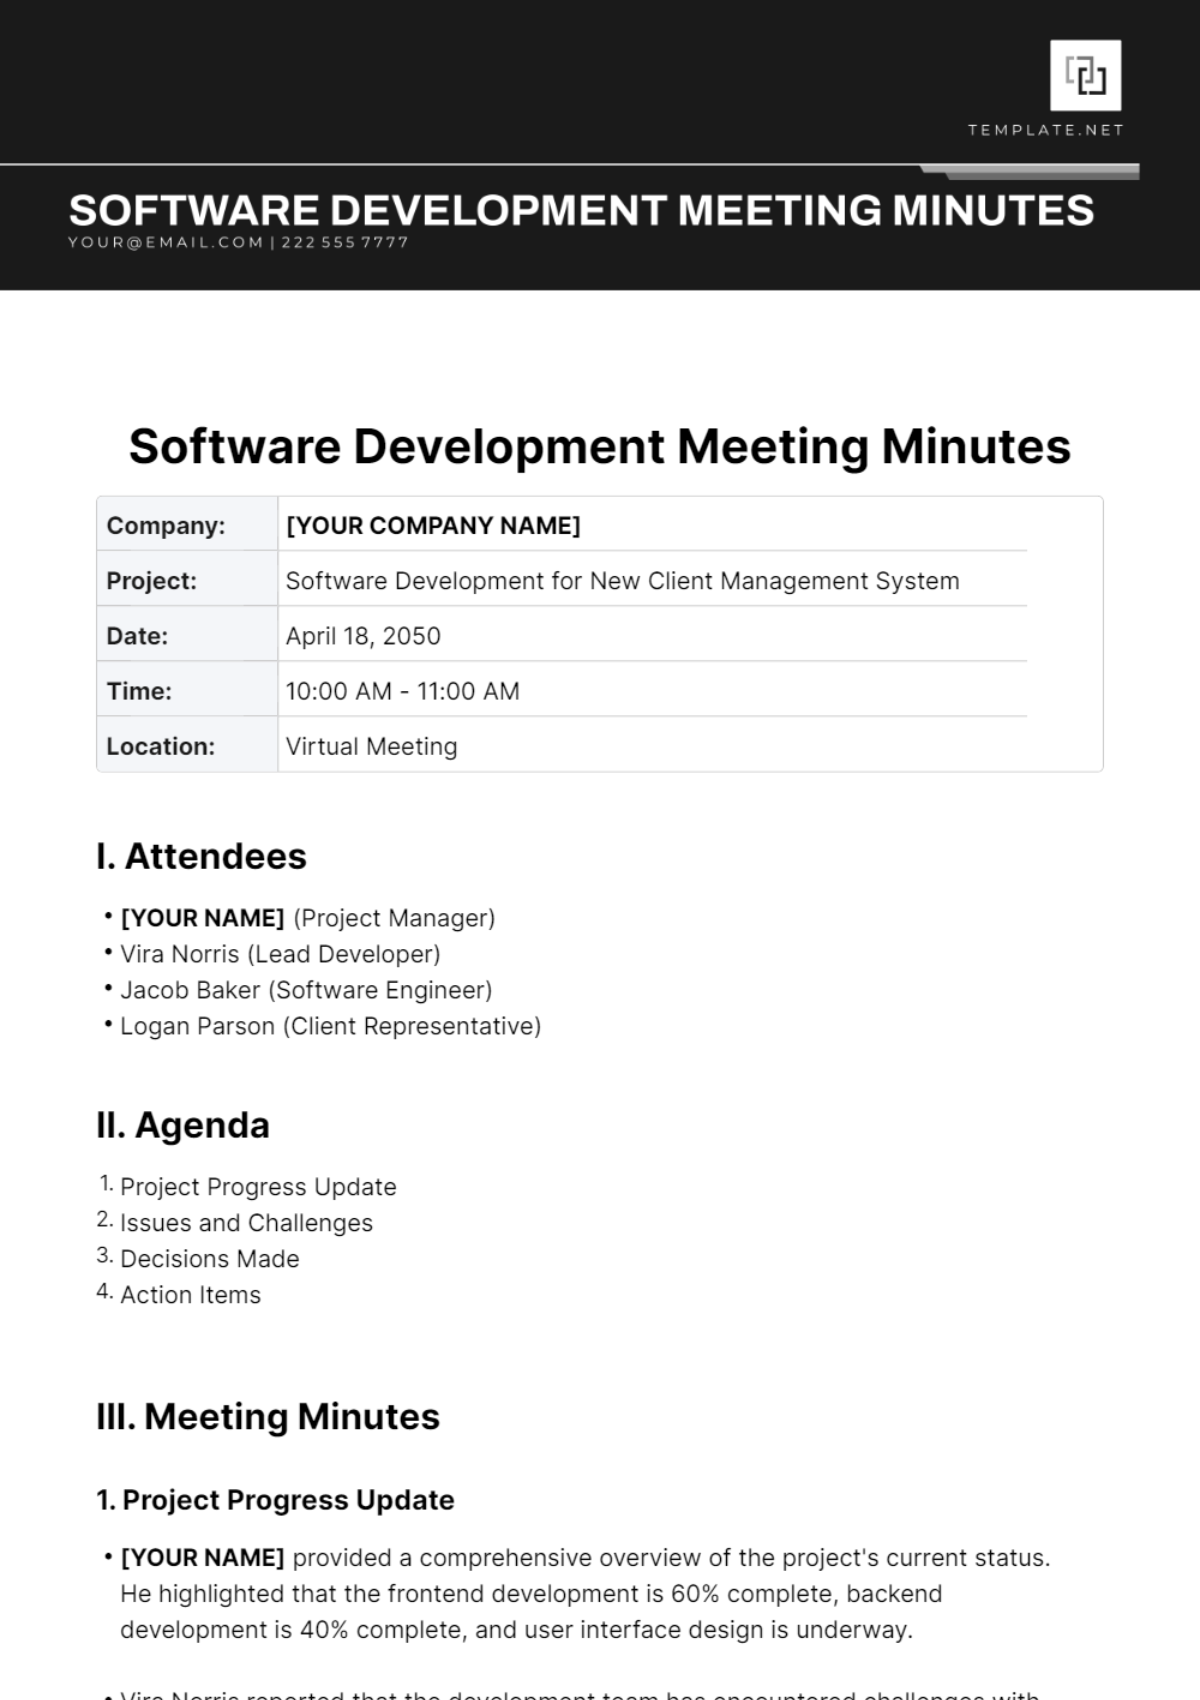 Software Development Meeting Minutes Template